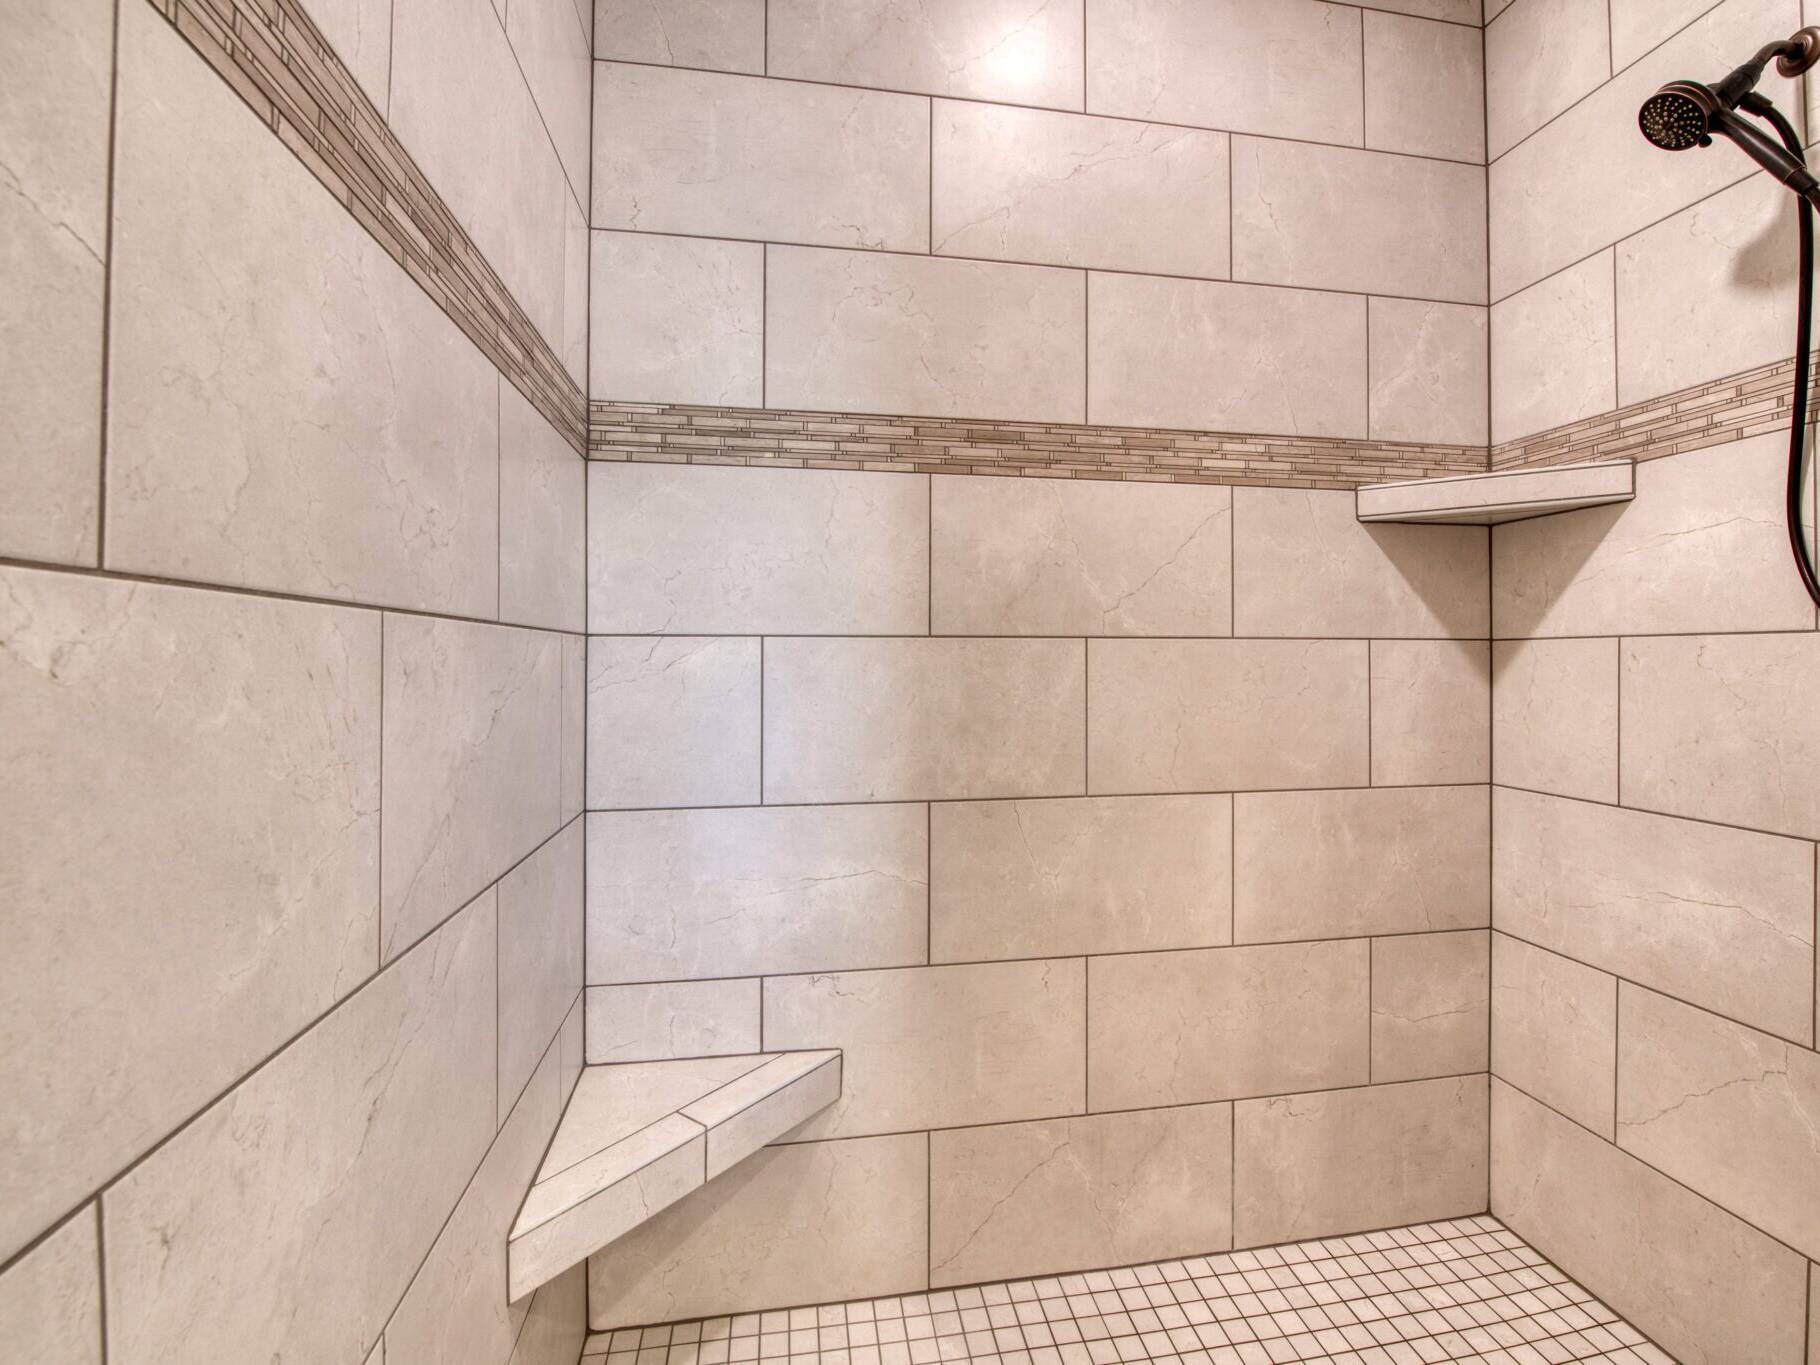 Tile shower in a custom home near Hamilton, MT.